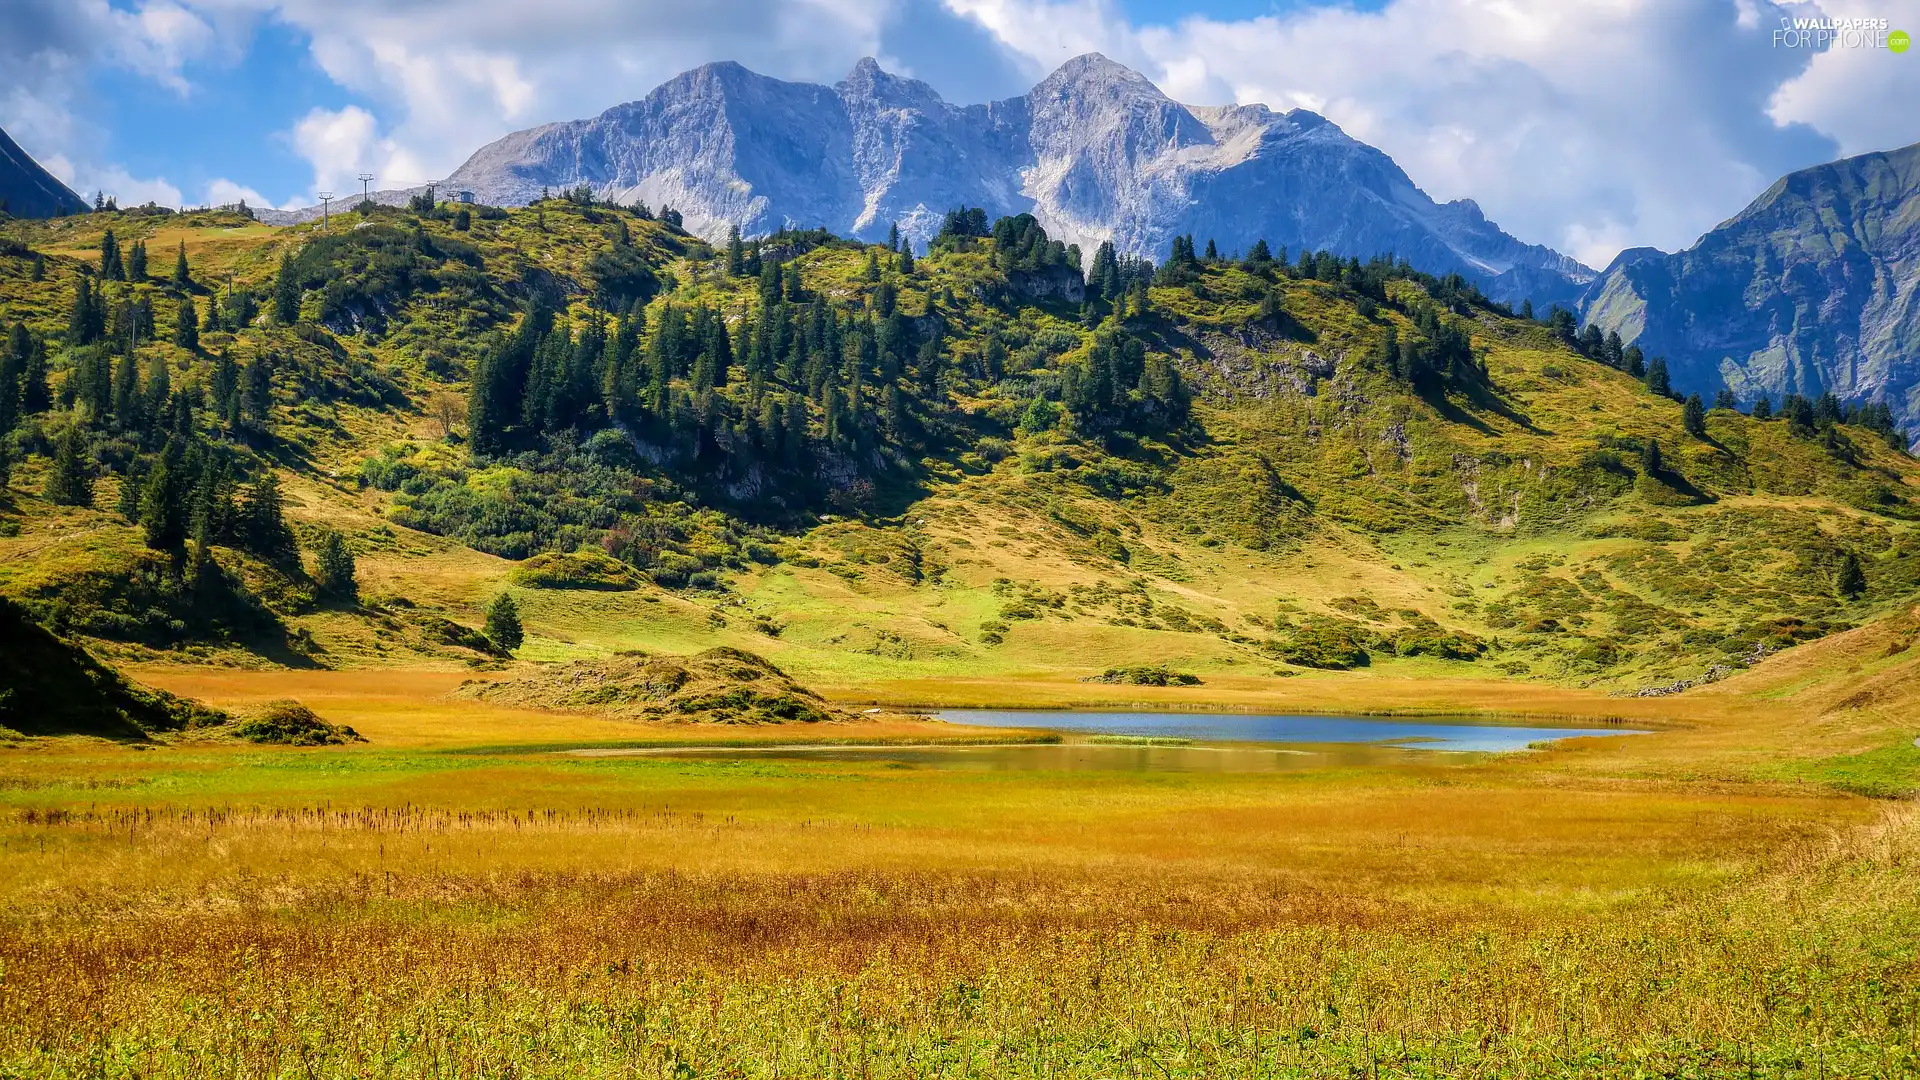 Alps, Mountains, lake, car in the meadow, viewes, Tirol, Austria, trees